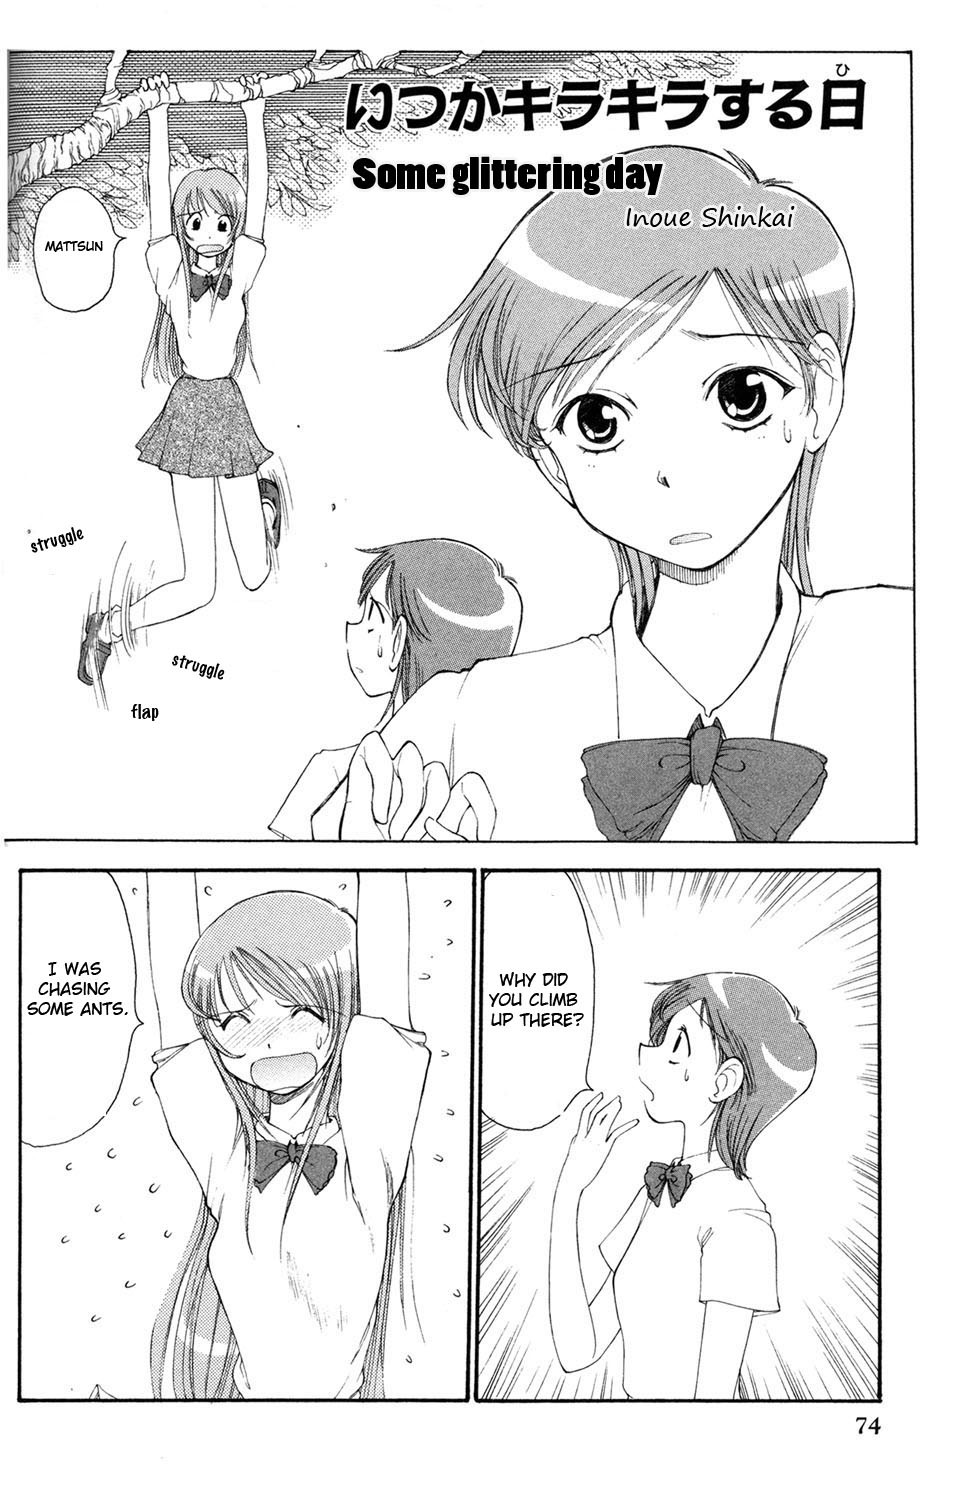 Pops (Inoue Shinkai) - Page 2